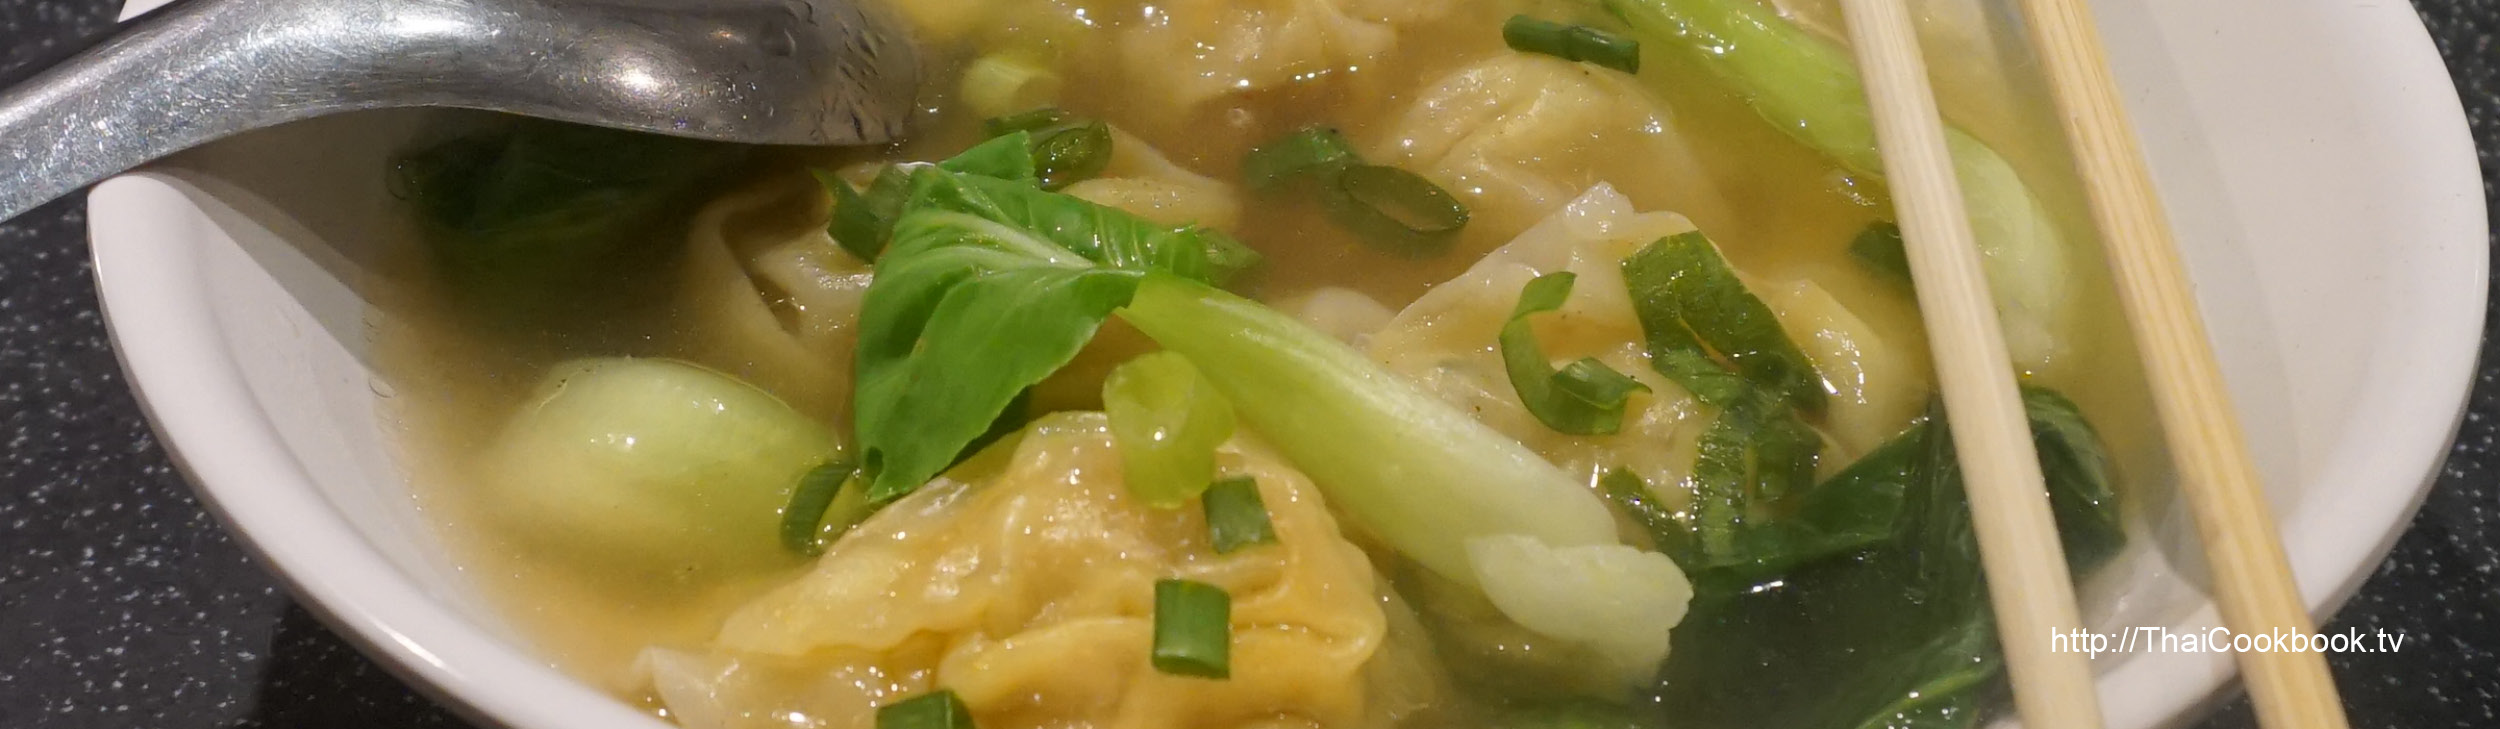 Authentic Thai recipe for Chicken Wonton Soup